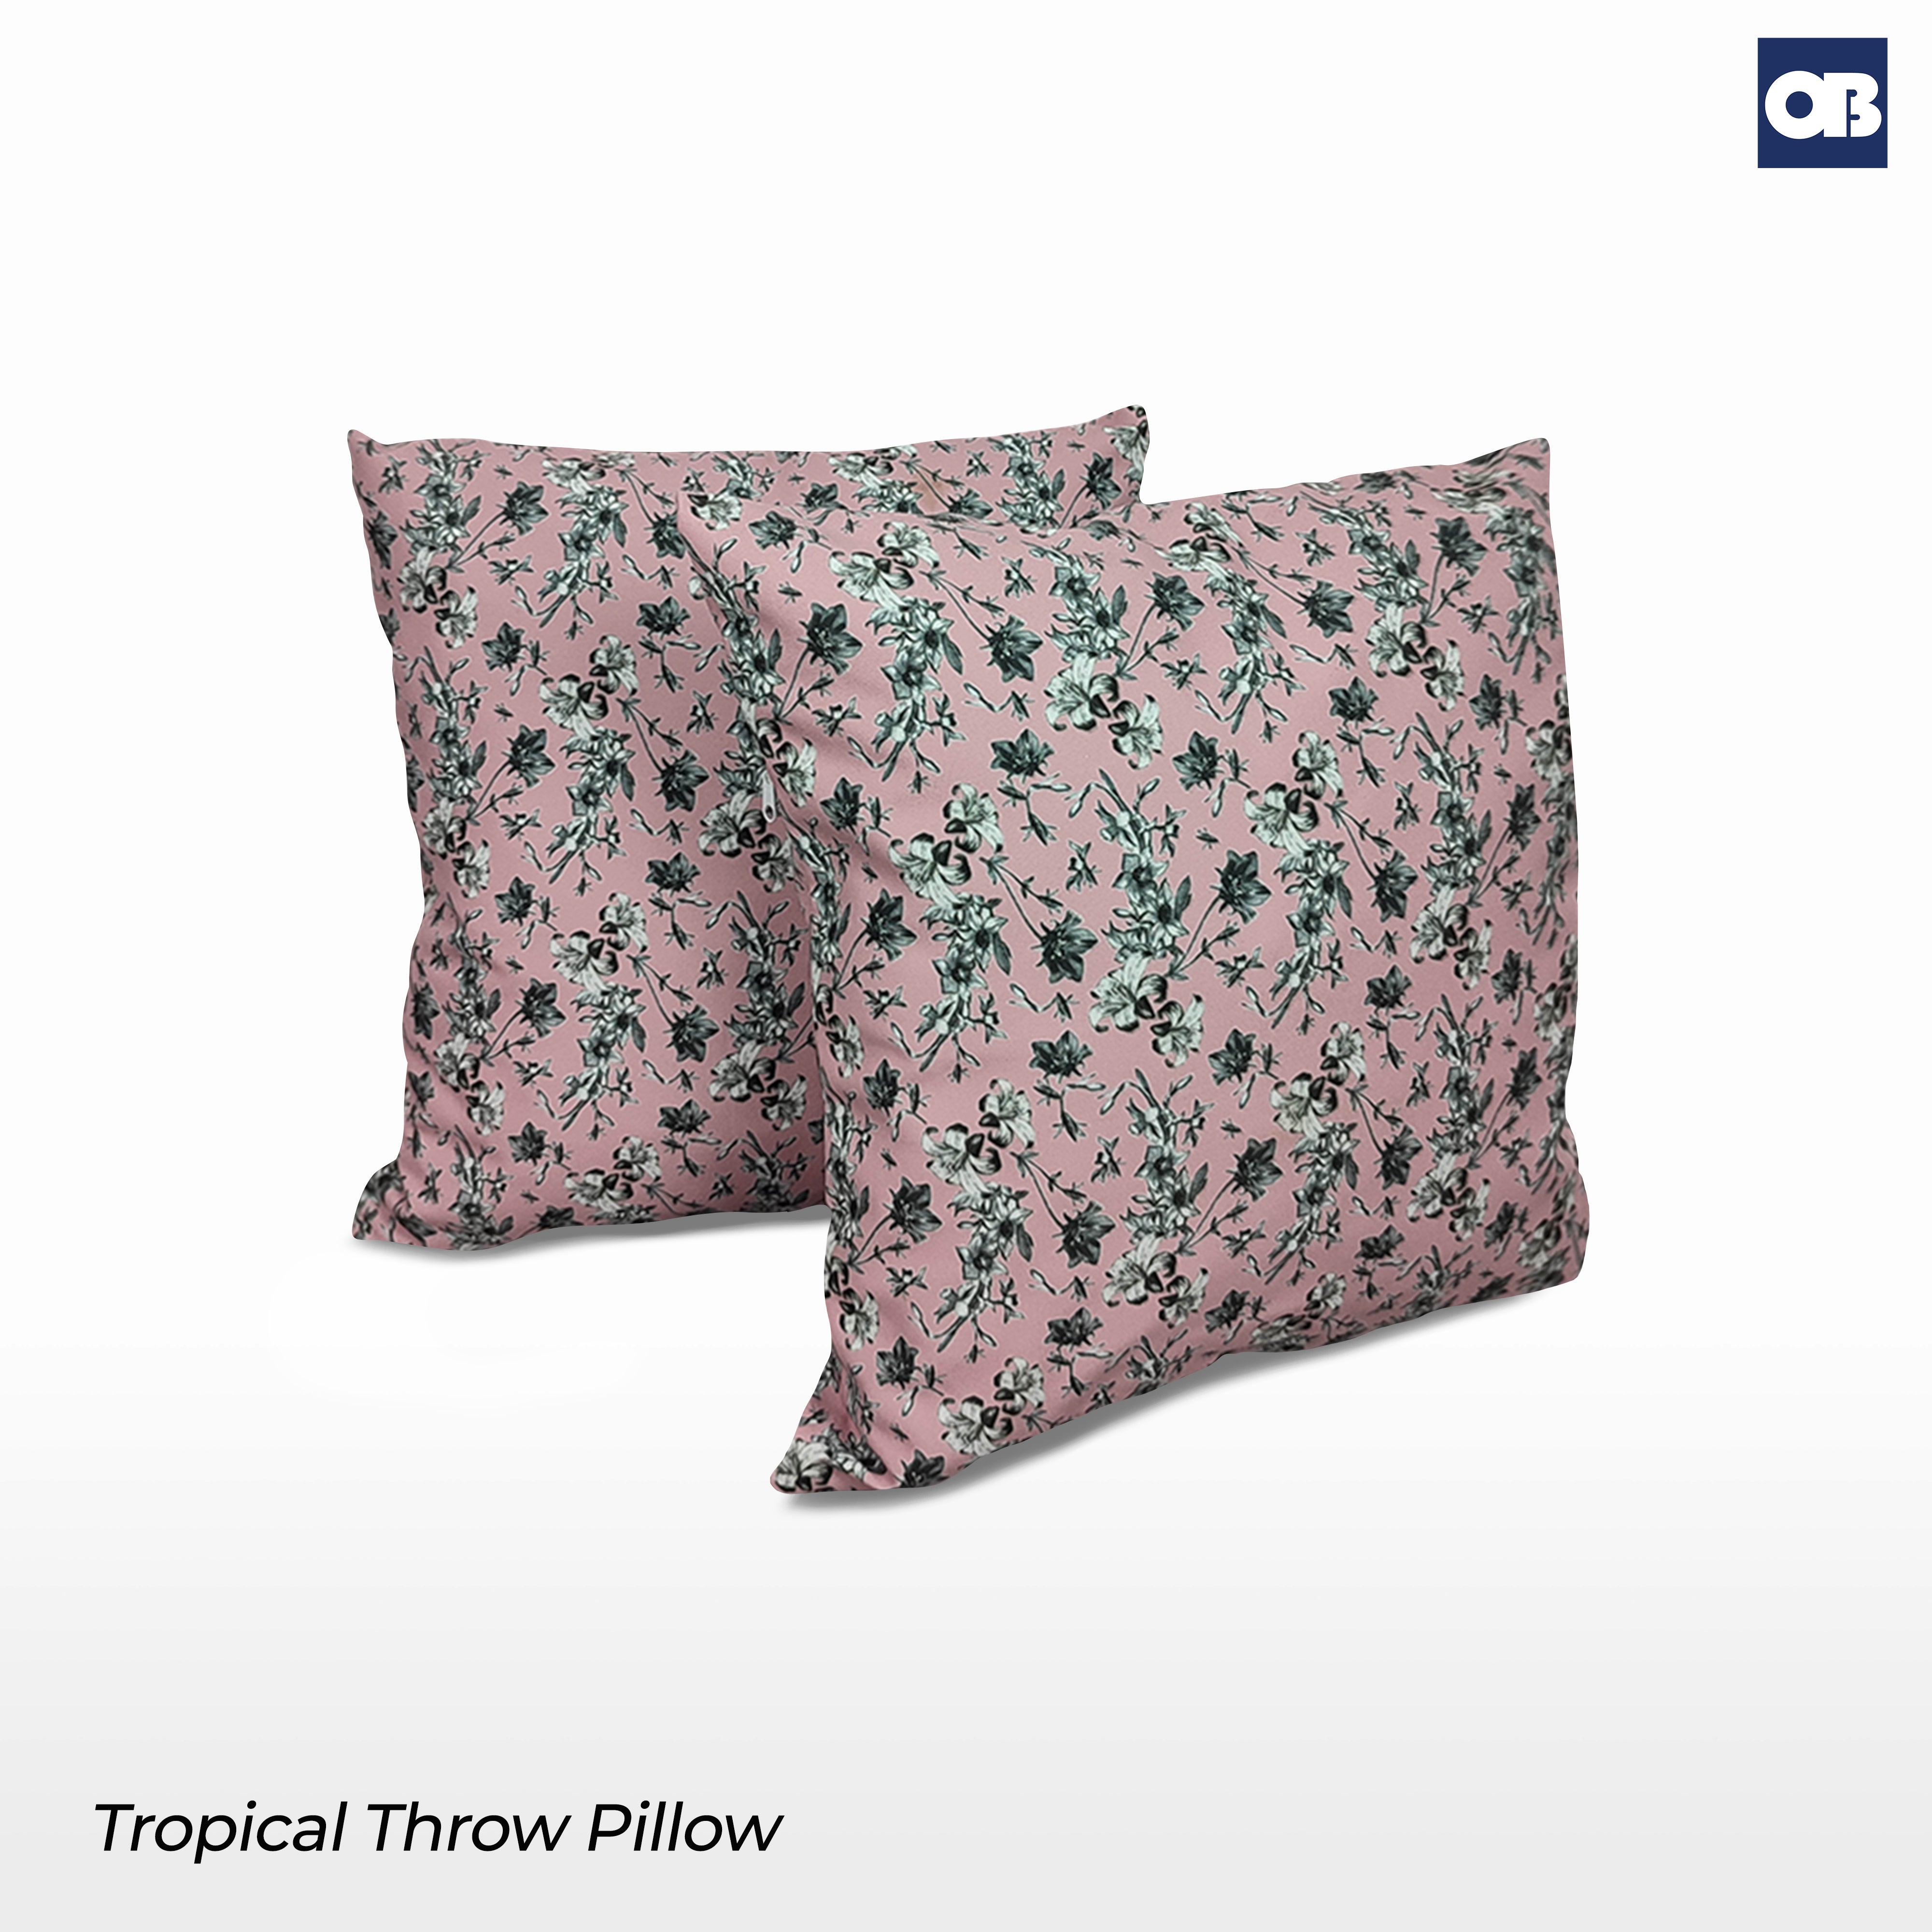 OB Tropical Throw Pillow